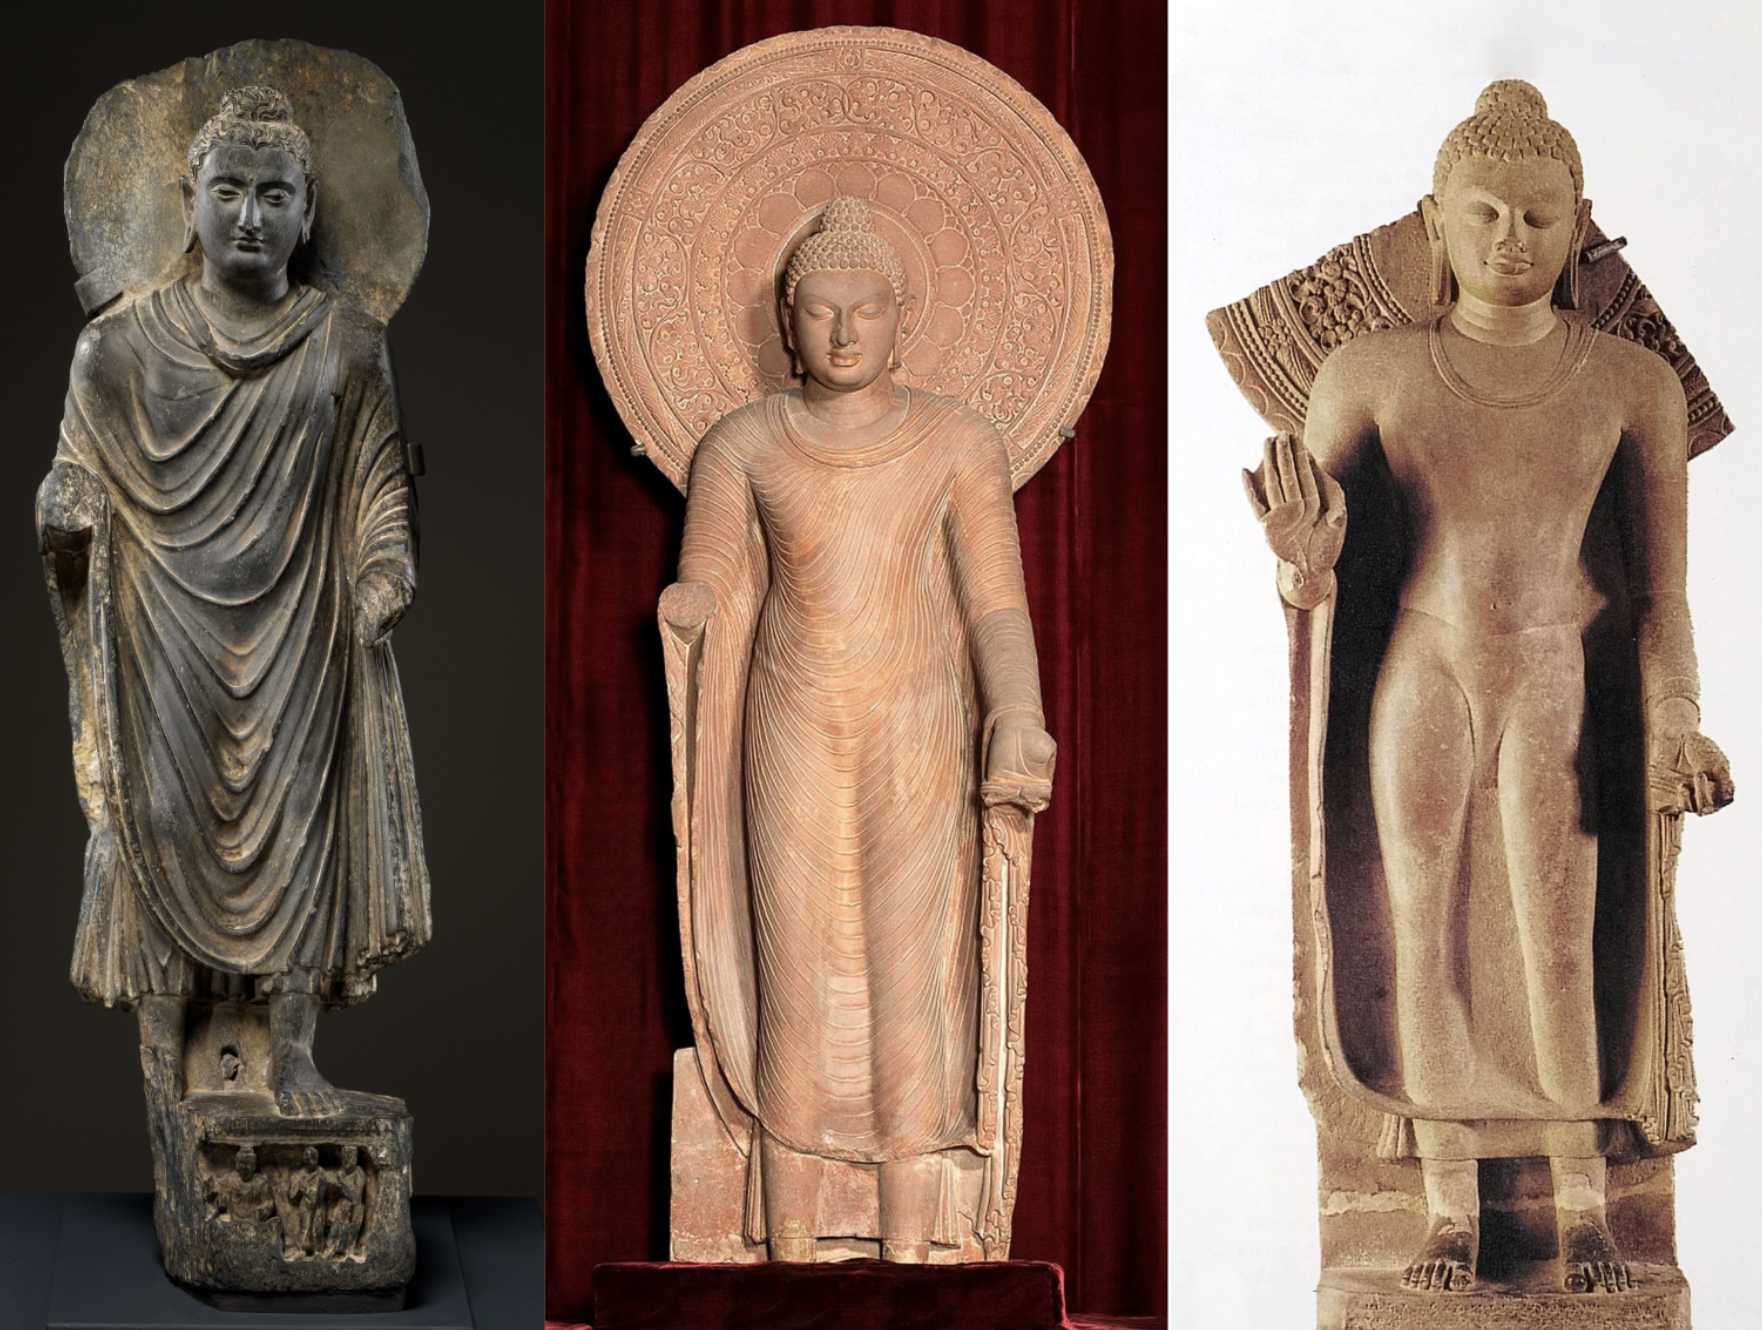 Left to right: Buddha, 3rd century CE, schist, Gandhara (The Metropolitan Museum of Art); Standing Buddha, c. 5th century CE, red sandstone, Mathura (Rashtrapati Bhavan Presidential Palace, New Delhi); Standing Buddha, 474 CE, sandstone, Sarnath (Sarnath Museum)